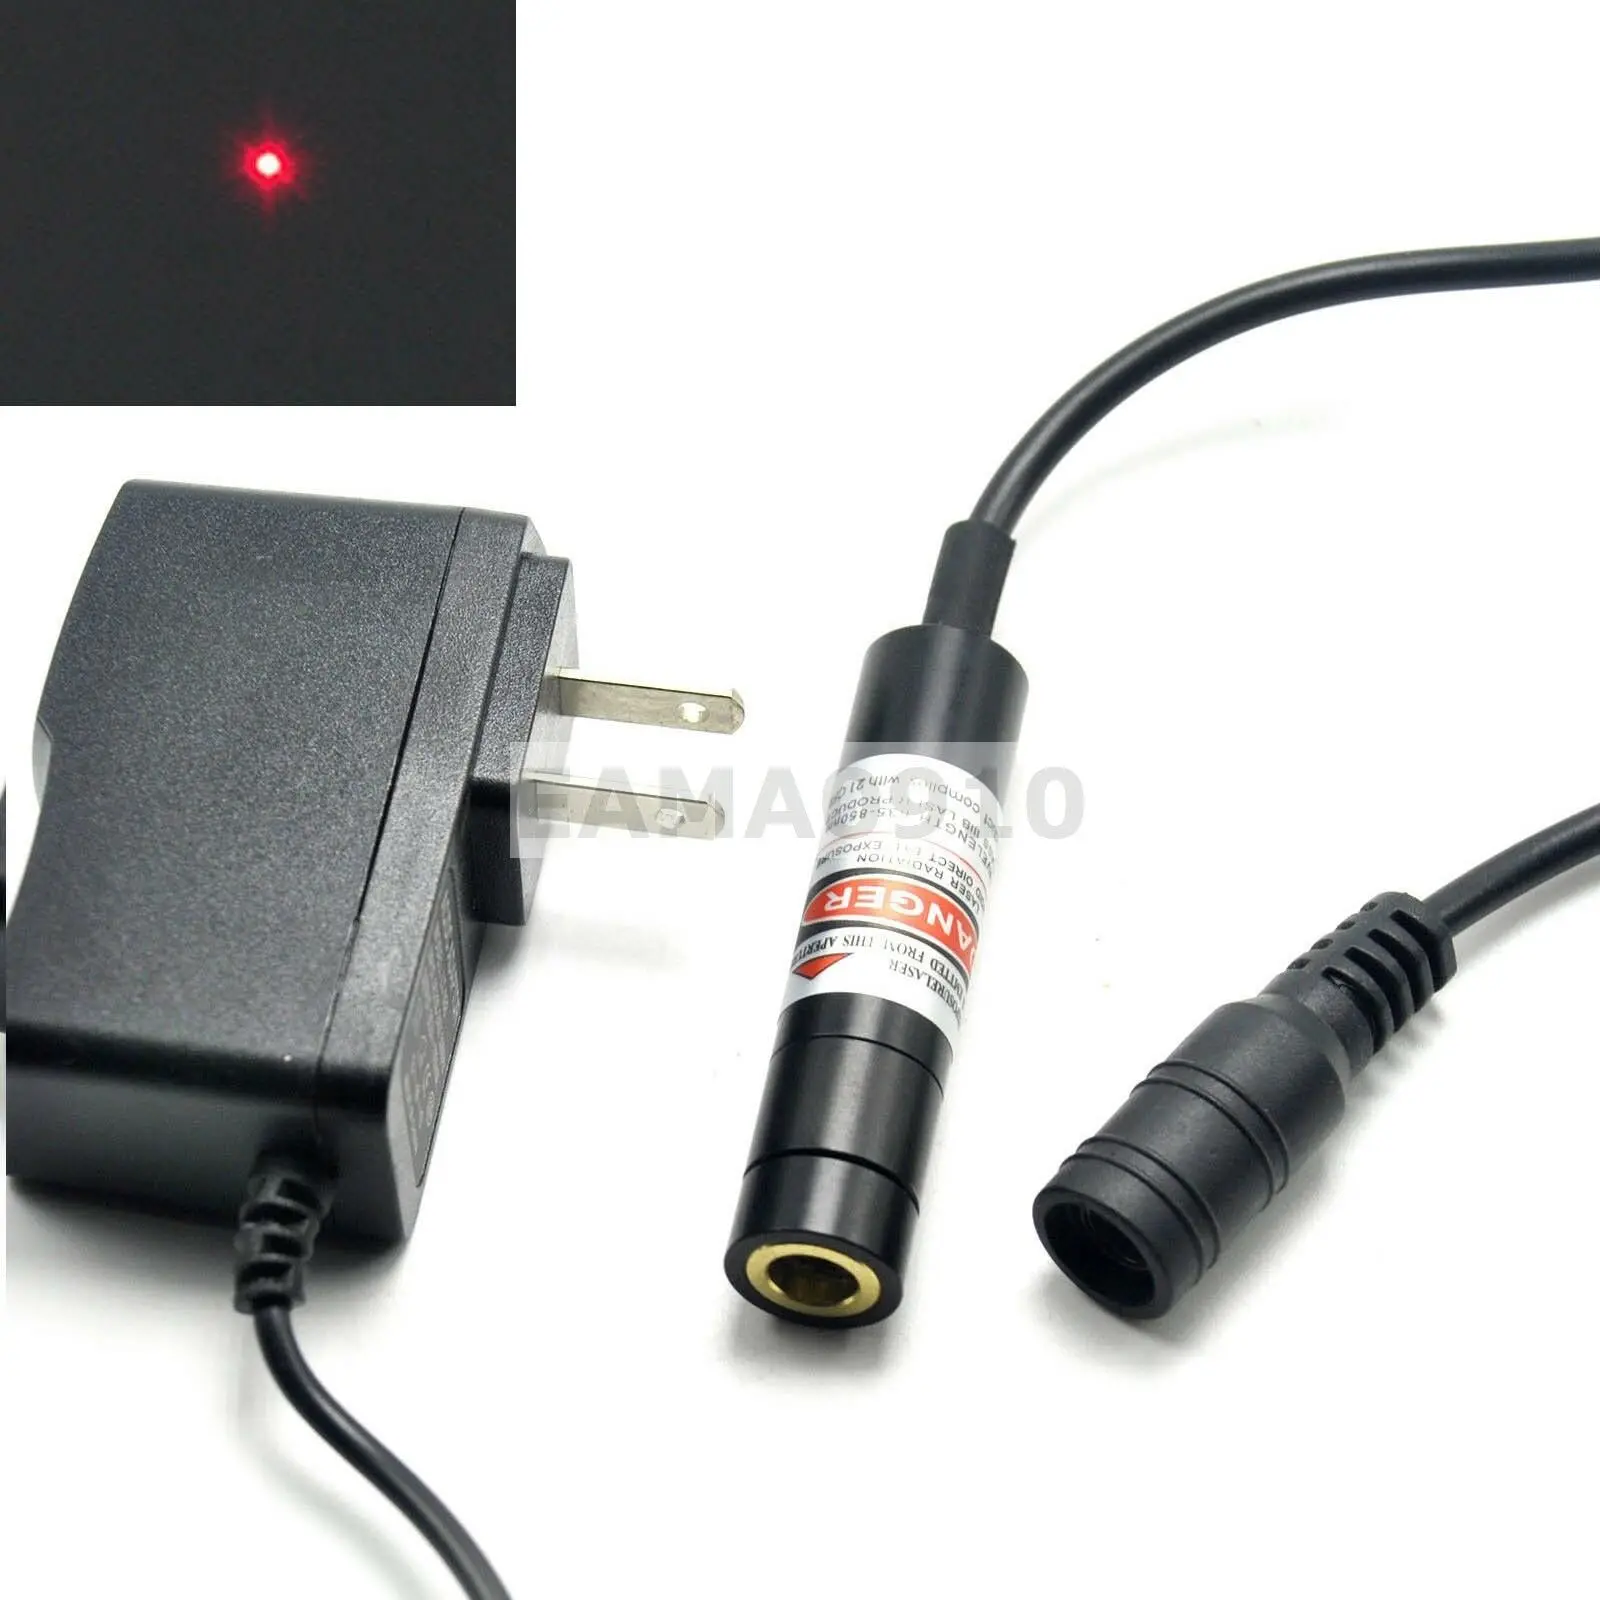 Focusable 20MW Chấm Đỏ Đèn Laser Laser Diode Module 650nm 12X55Mm W/Adapter